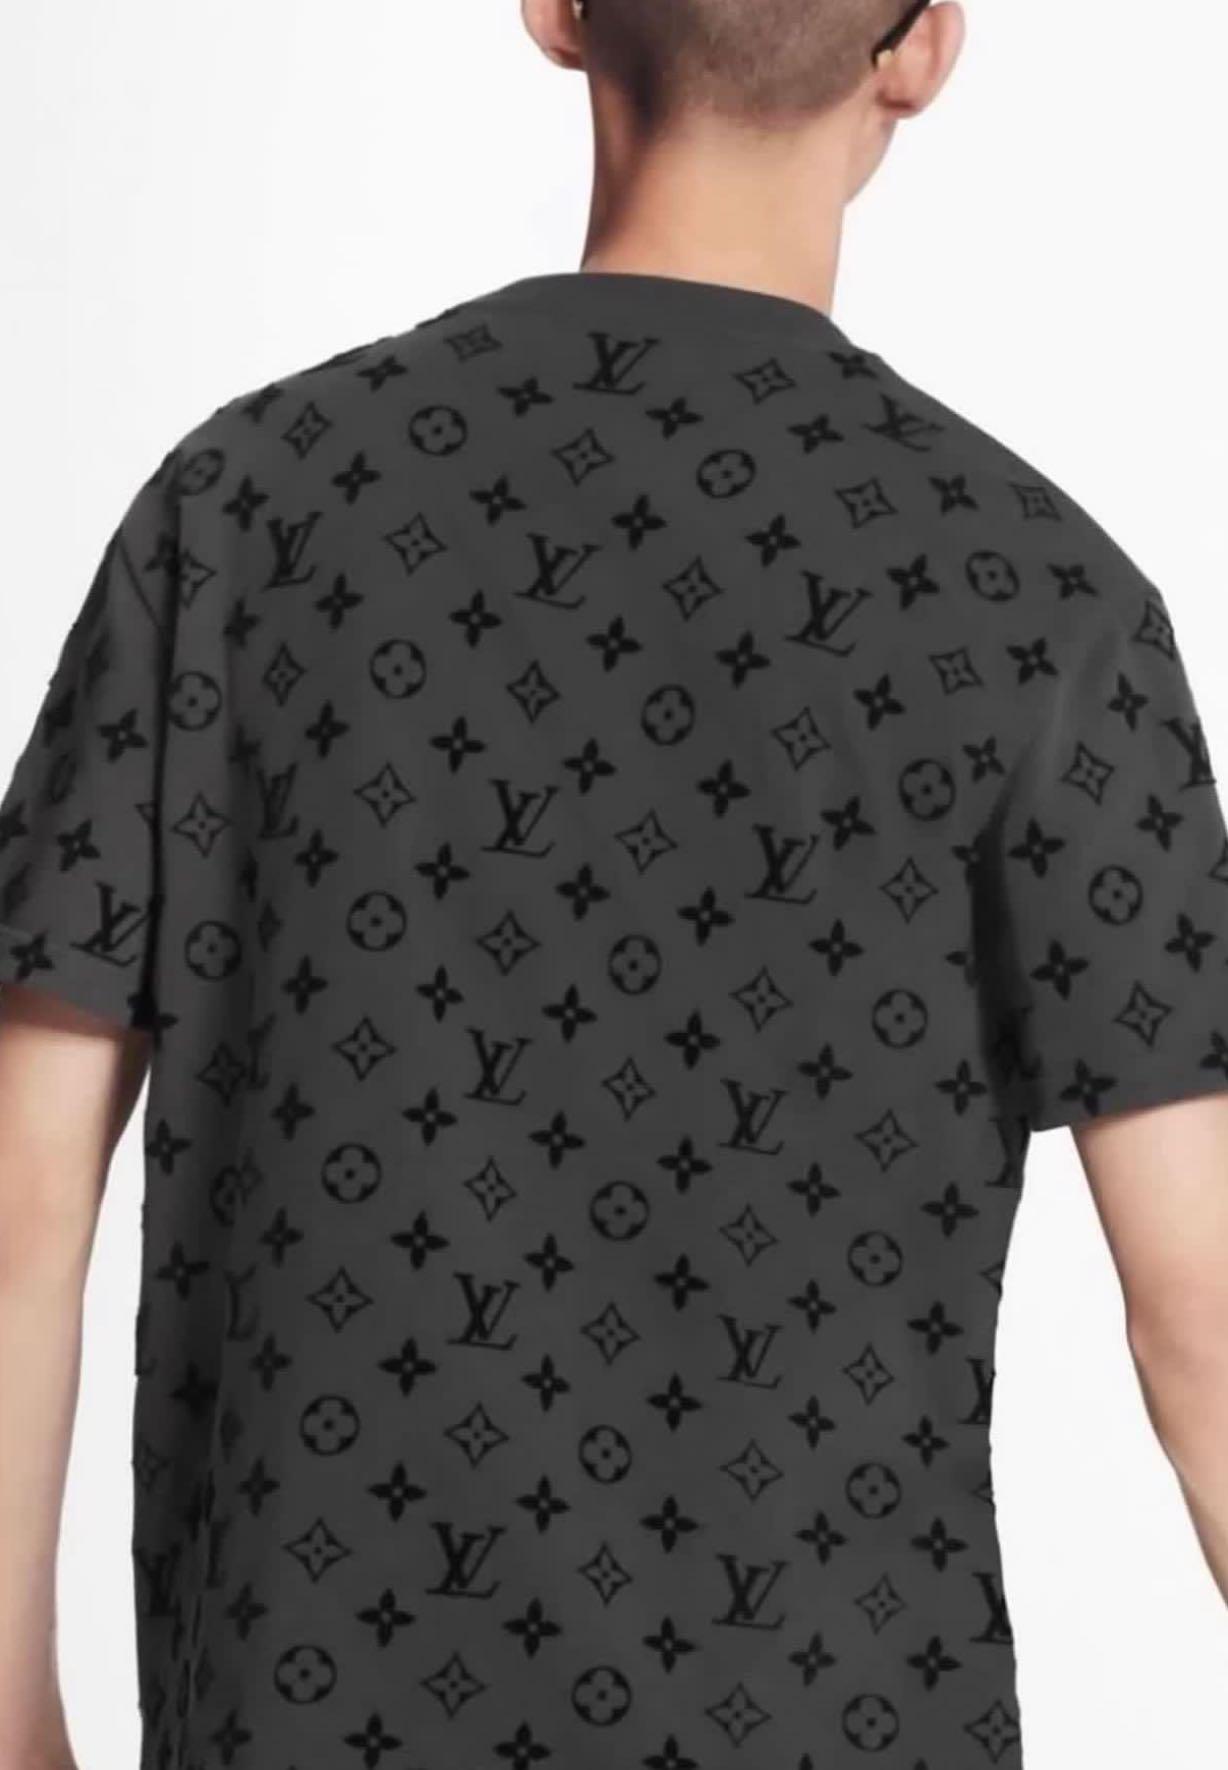 Louis Vuitton Louis Vuitton hook and loop monogram t shirt